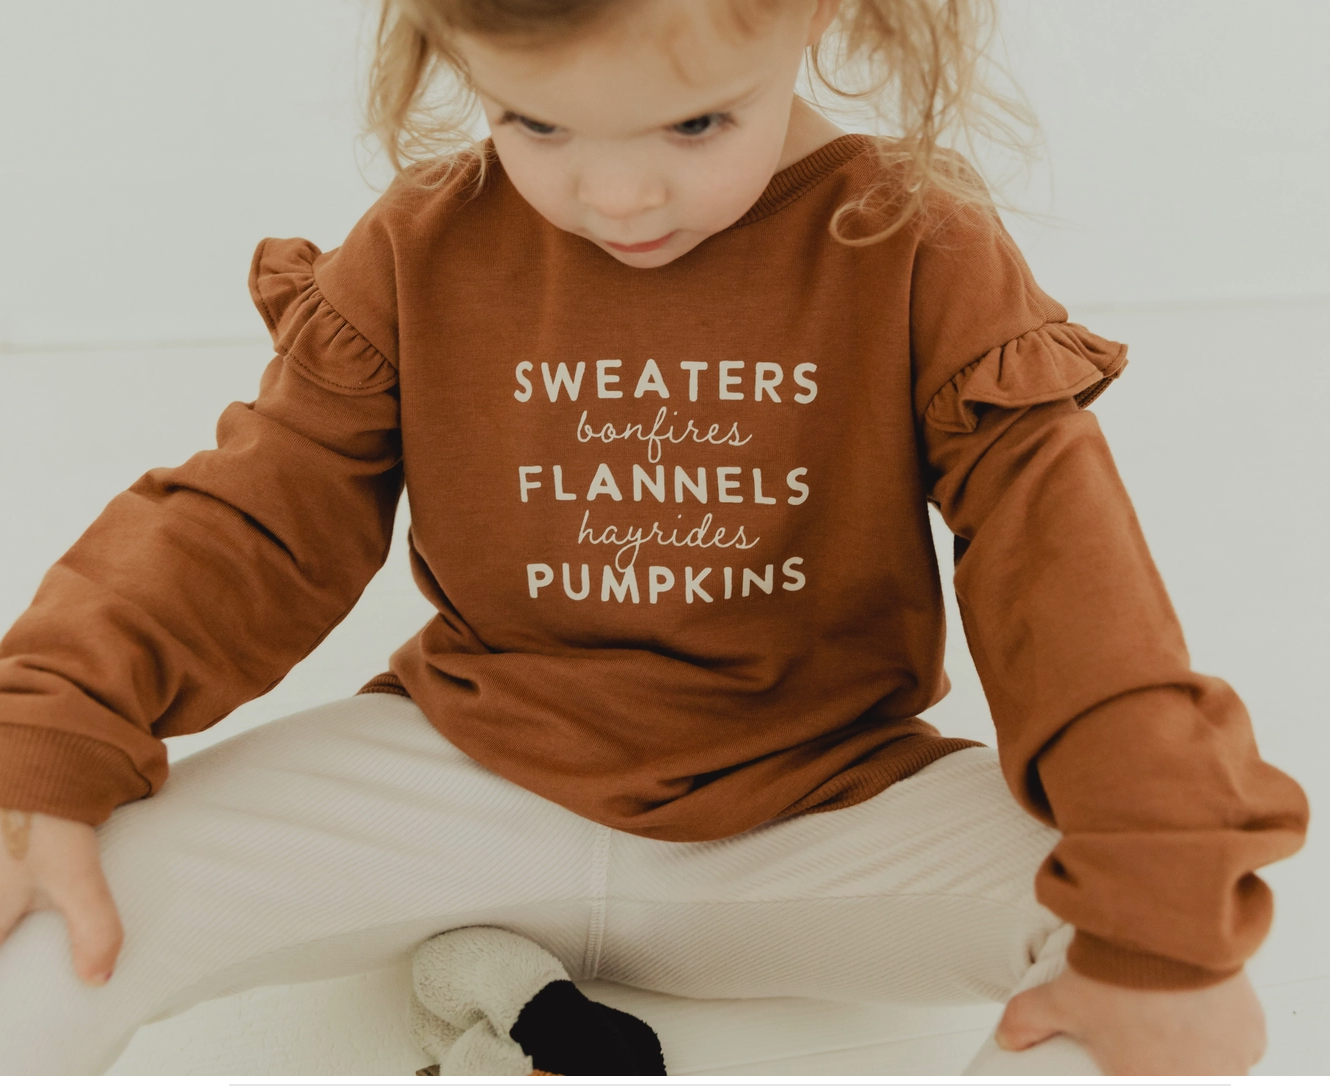 Load image into Gallery viewer, Ruffle Sweatshirt in Sweaters Bonfires Flannels
